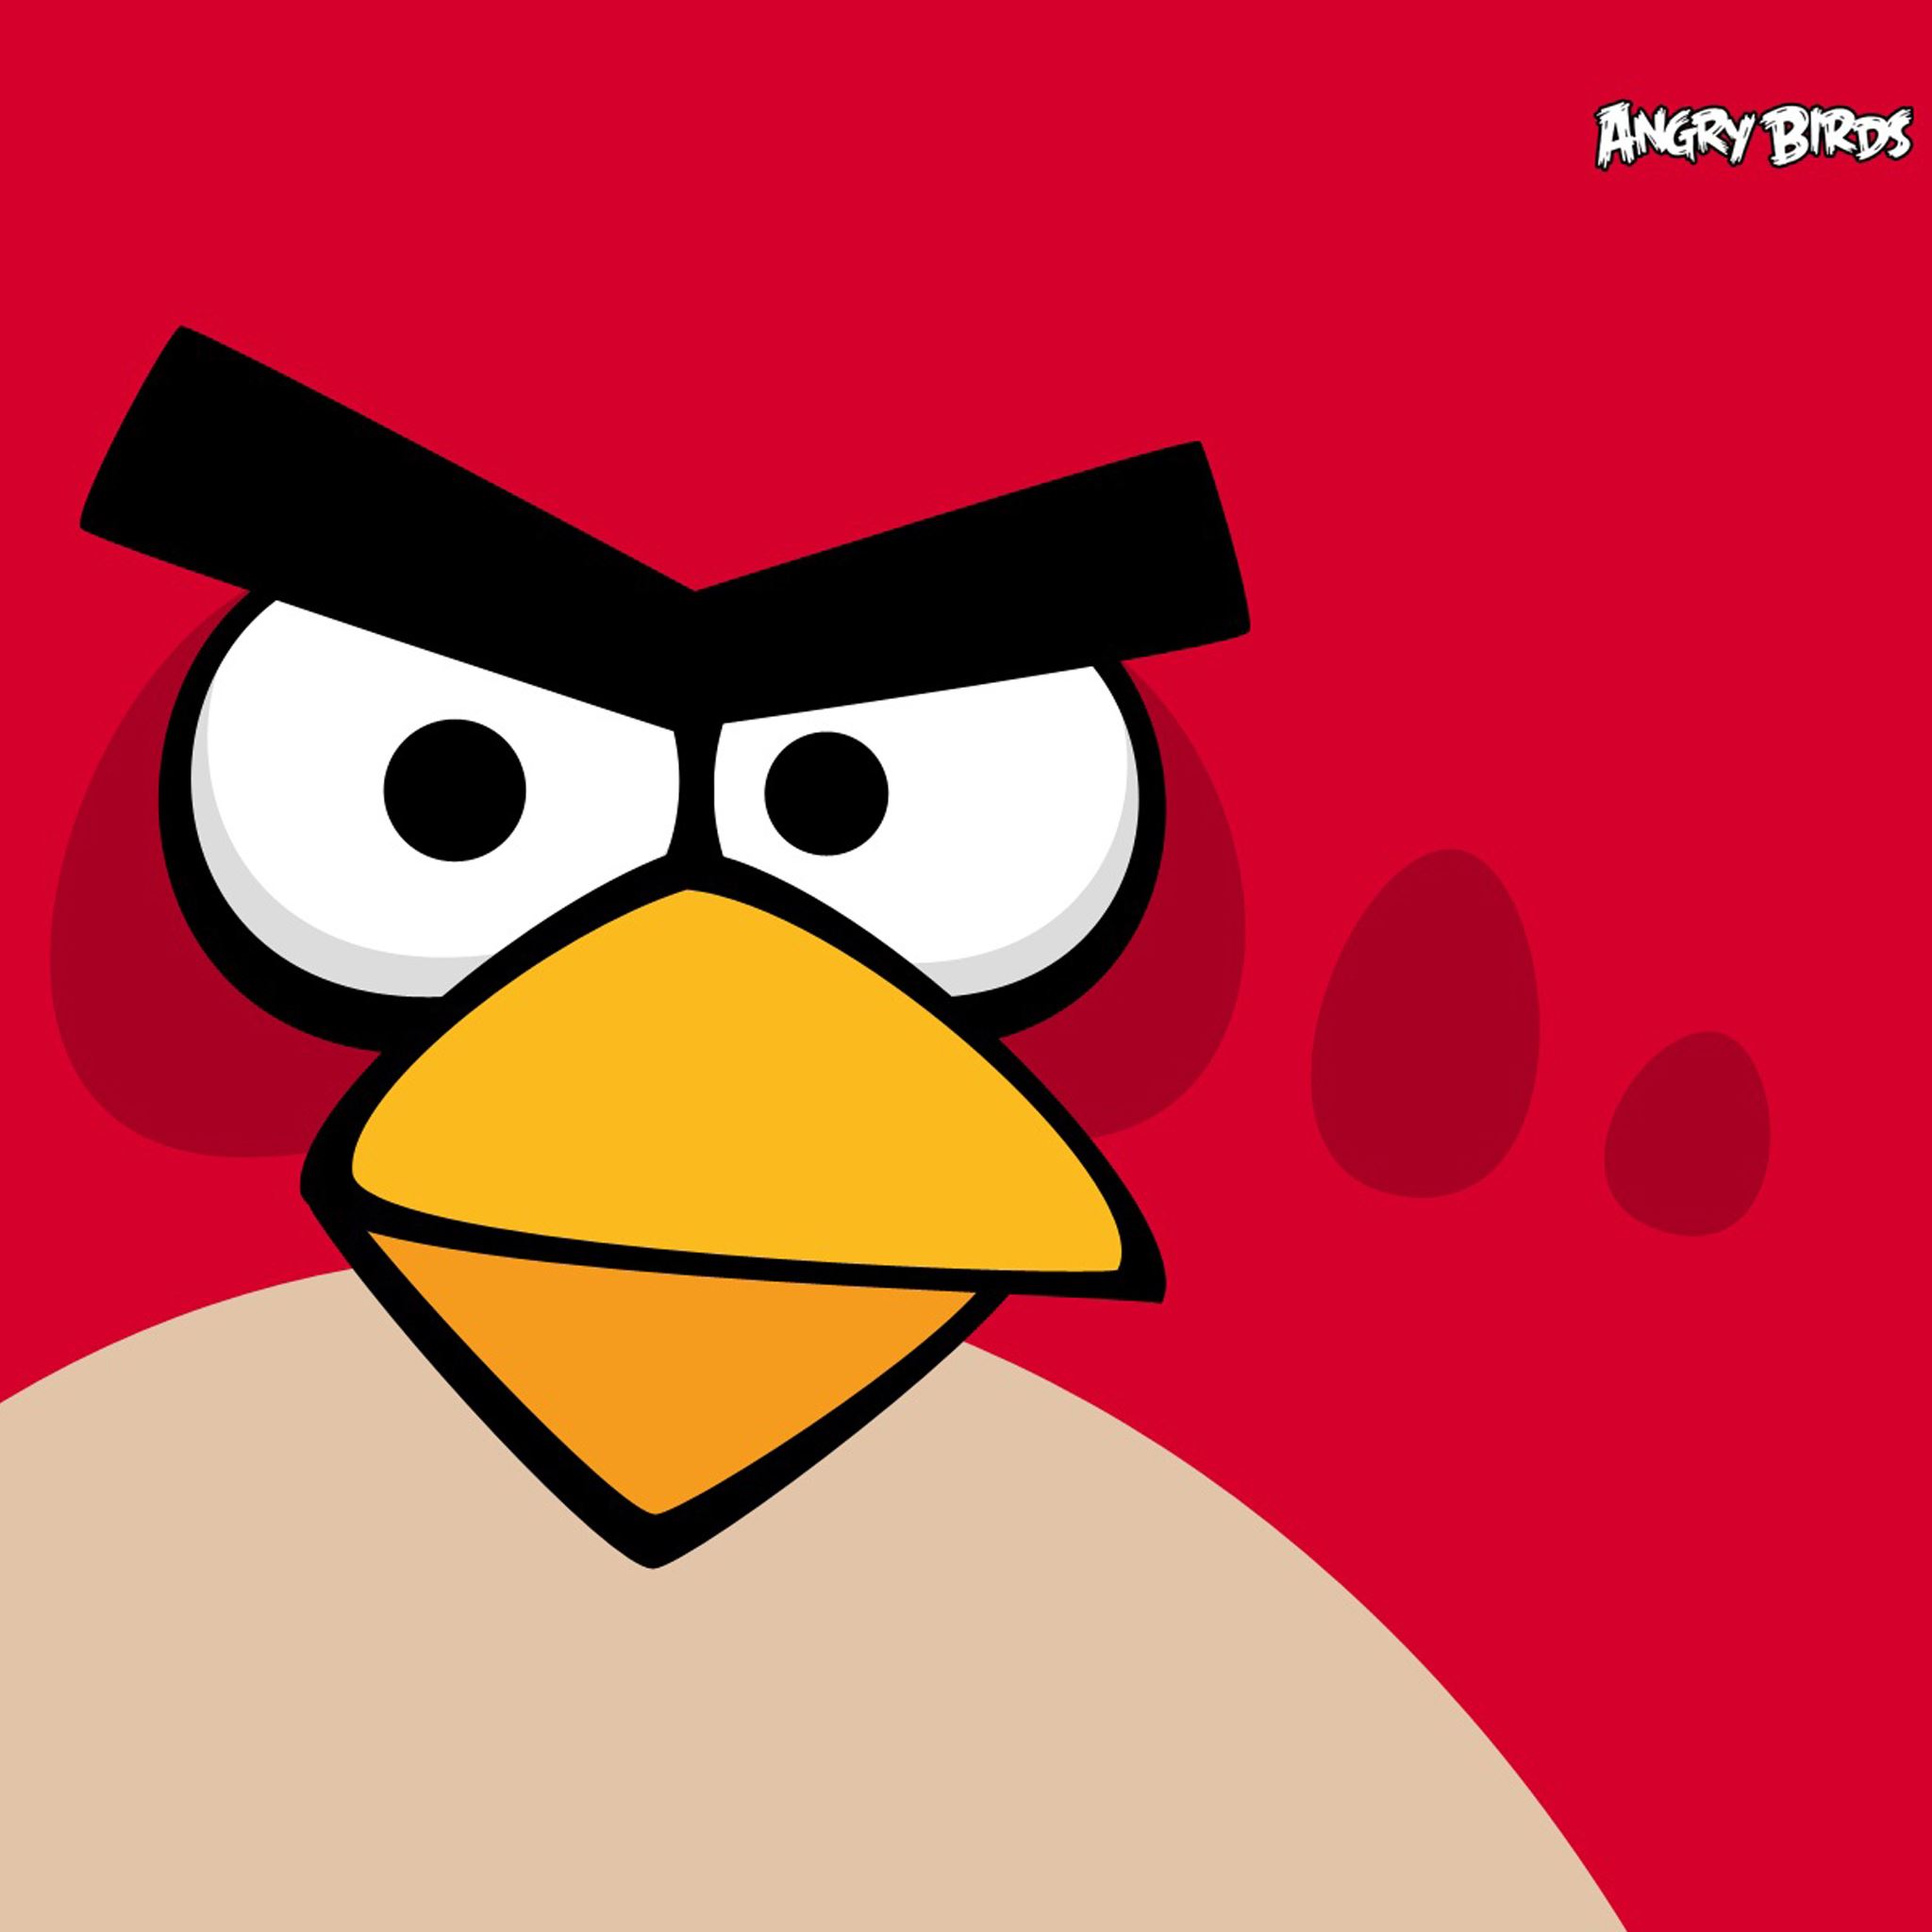 Angry Birds iPad Air wallpaper 